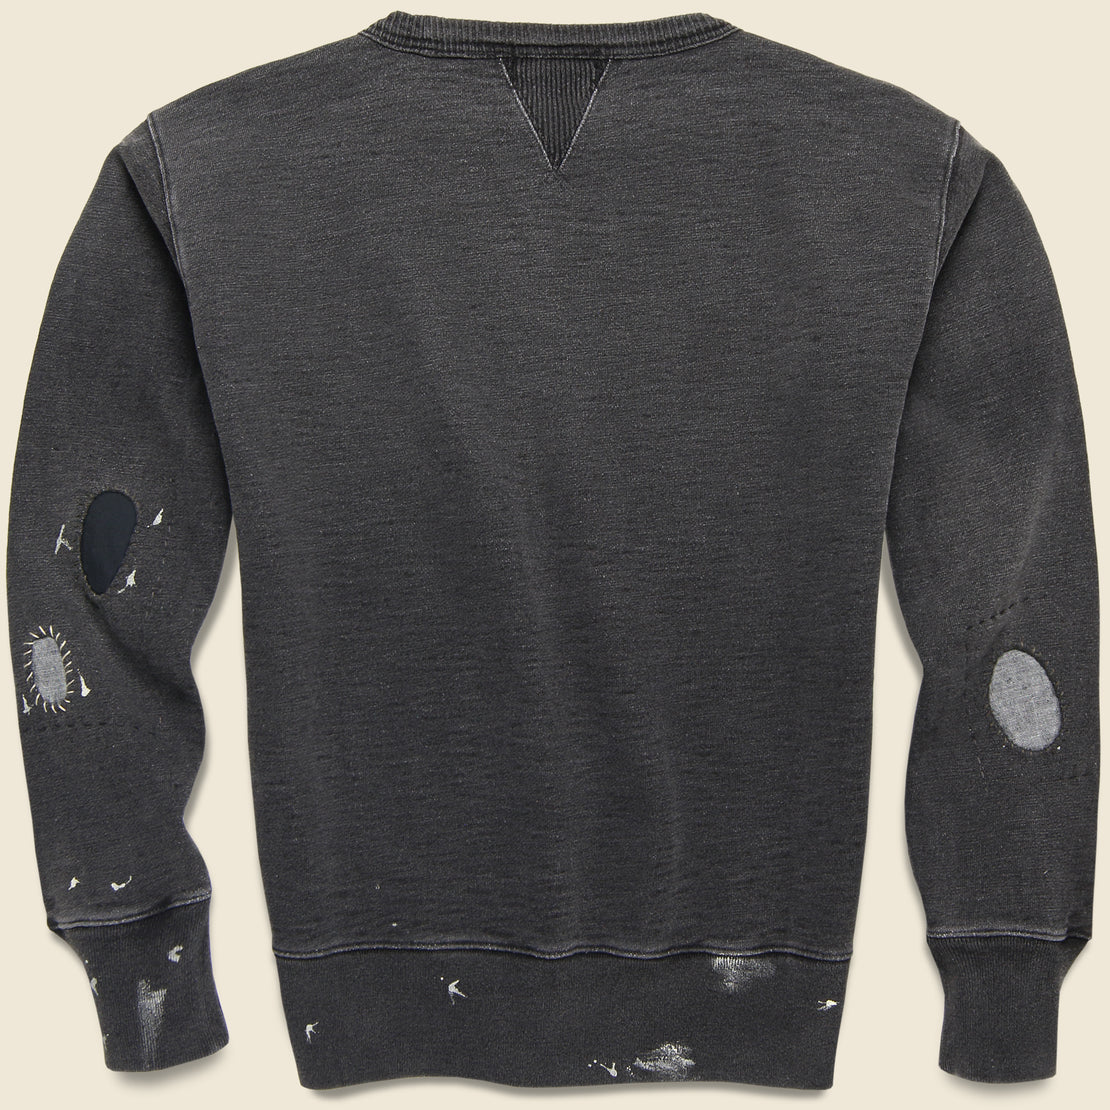 Distressed French Terry Sweatshirt - Sulphur Black - RRL - STAG Provisions - Tops - Fleece / Sweatshirt